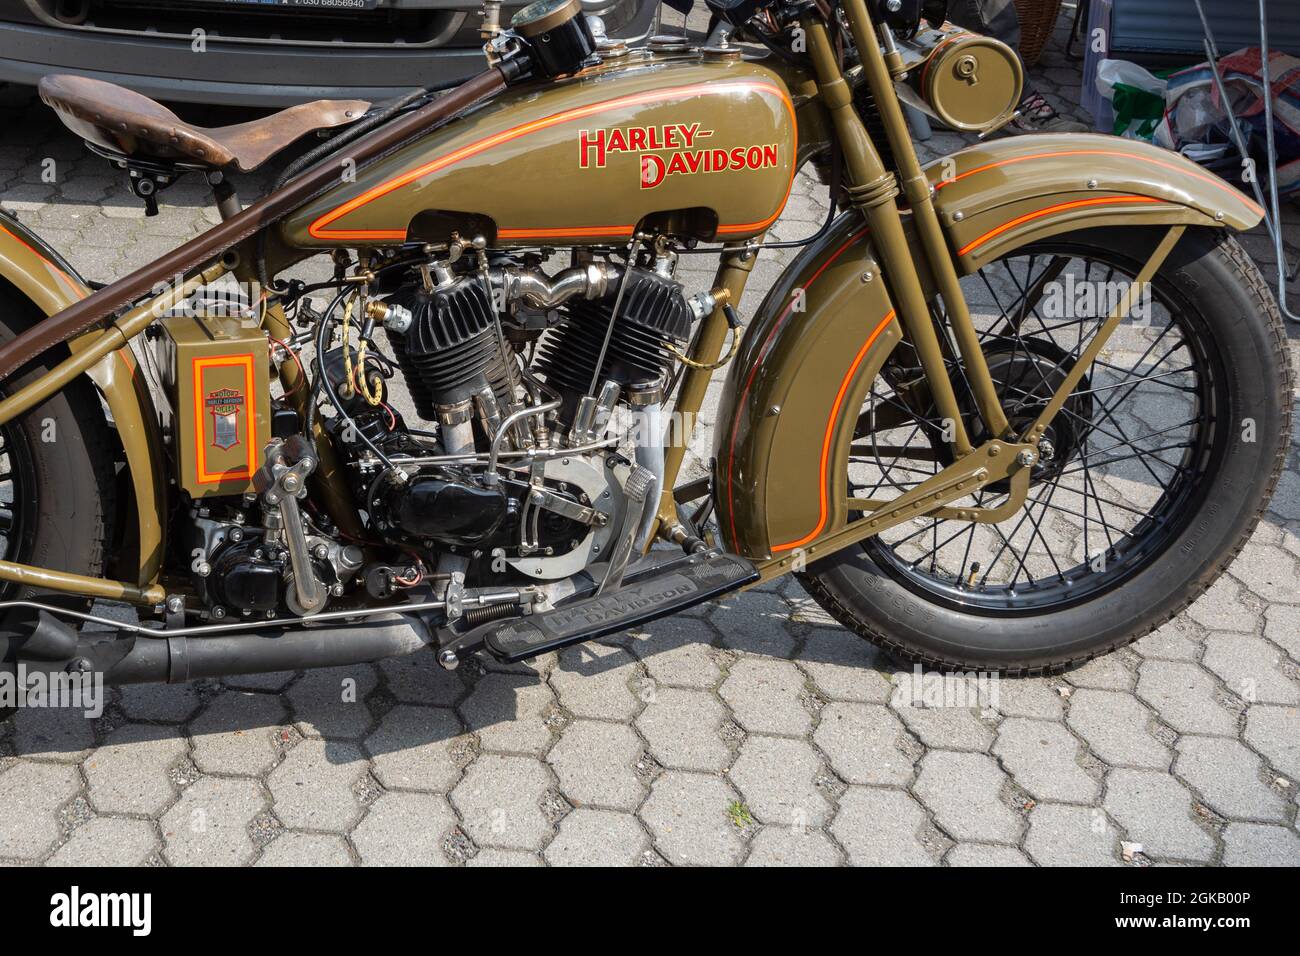 Harley Davidson JD dal 1928 in ottime condizioni restaurate - vista laterale Foto Stock